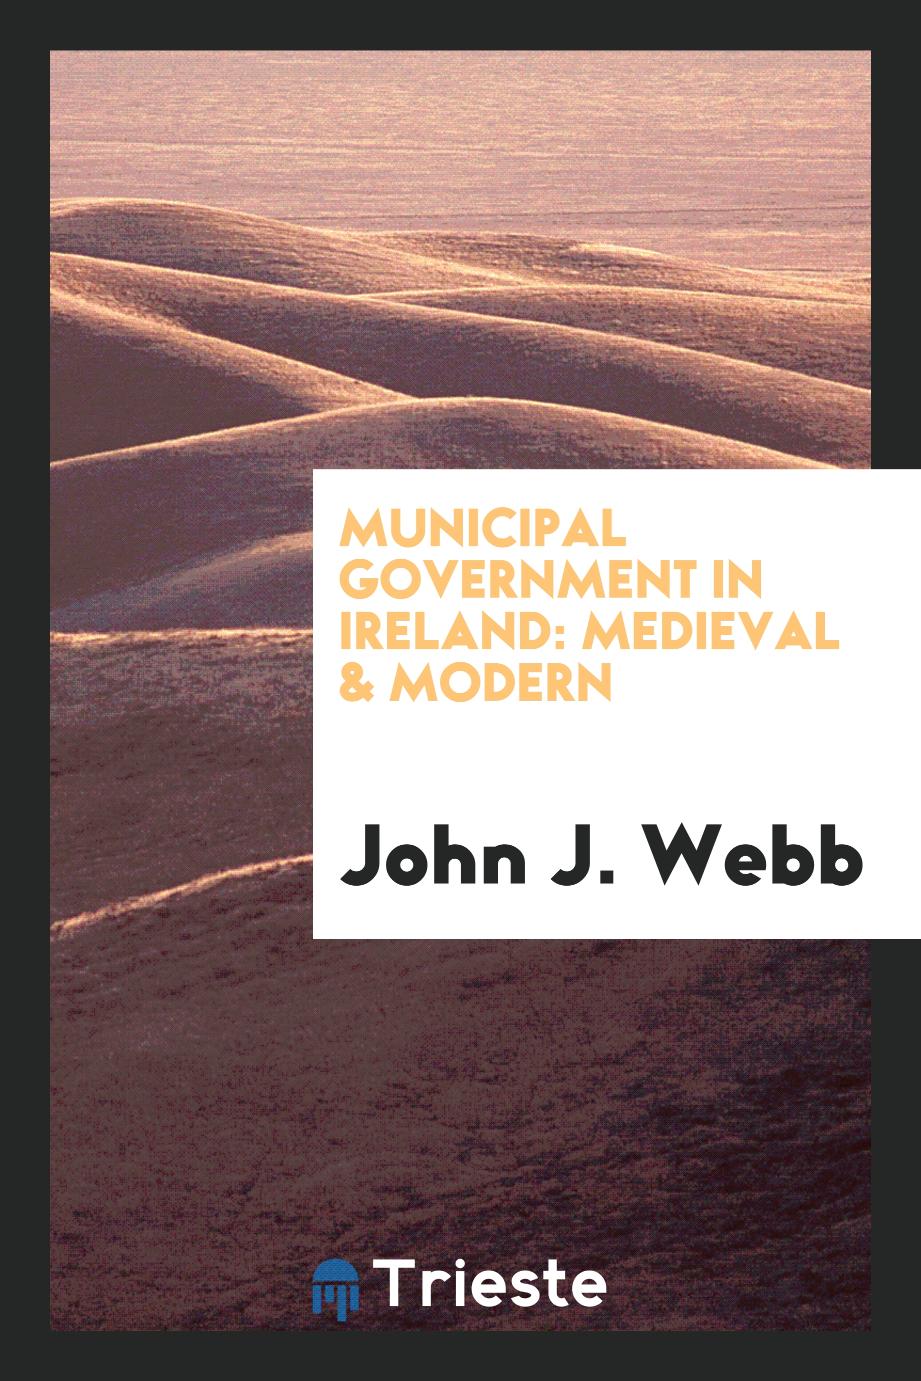 Municipal government in Ireland: medieval & modern